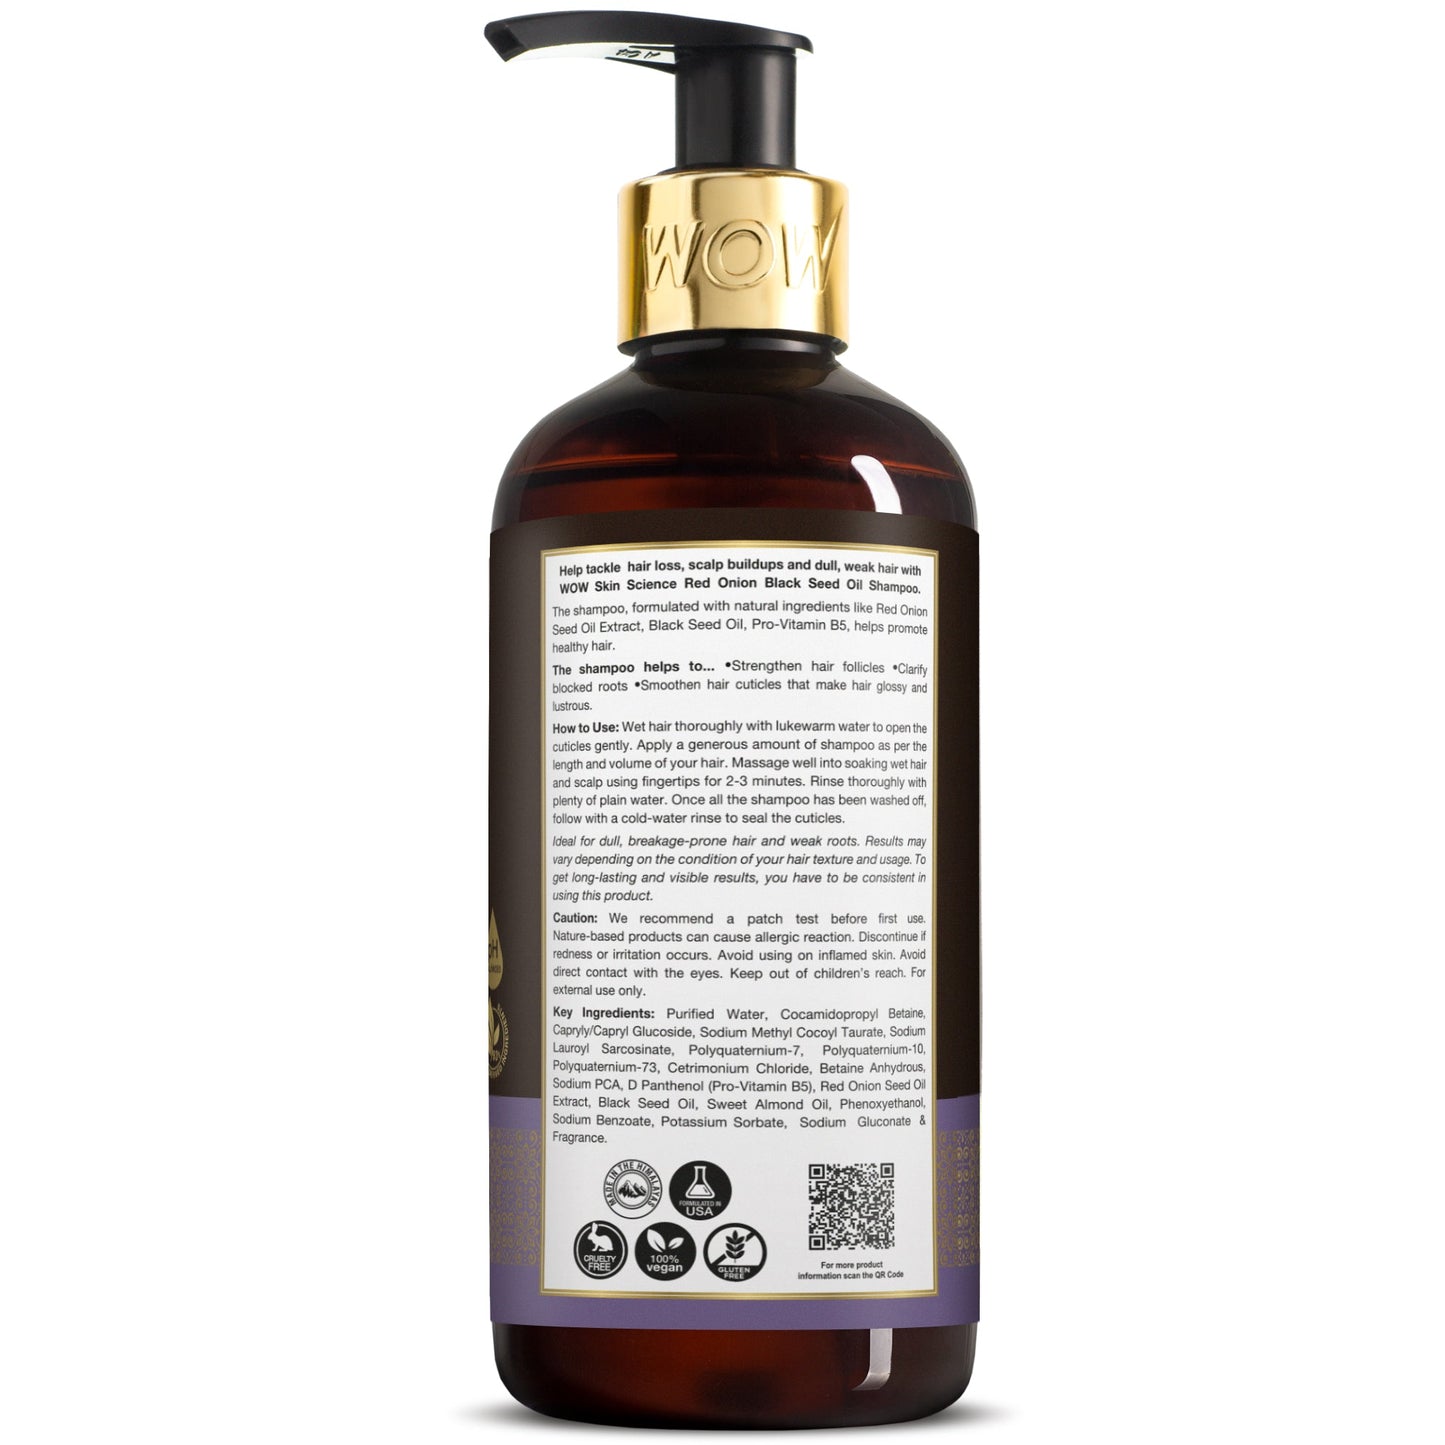 WOW Skin Science Red Onion Black Seed Oil Shampoo- 300ml